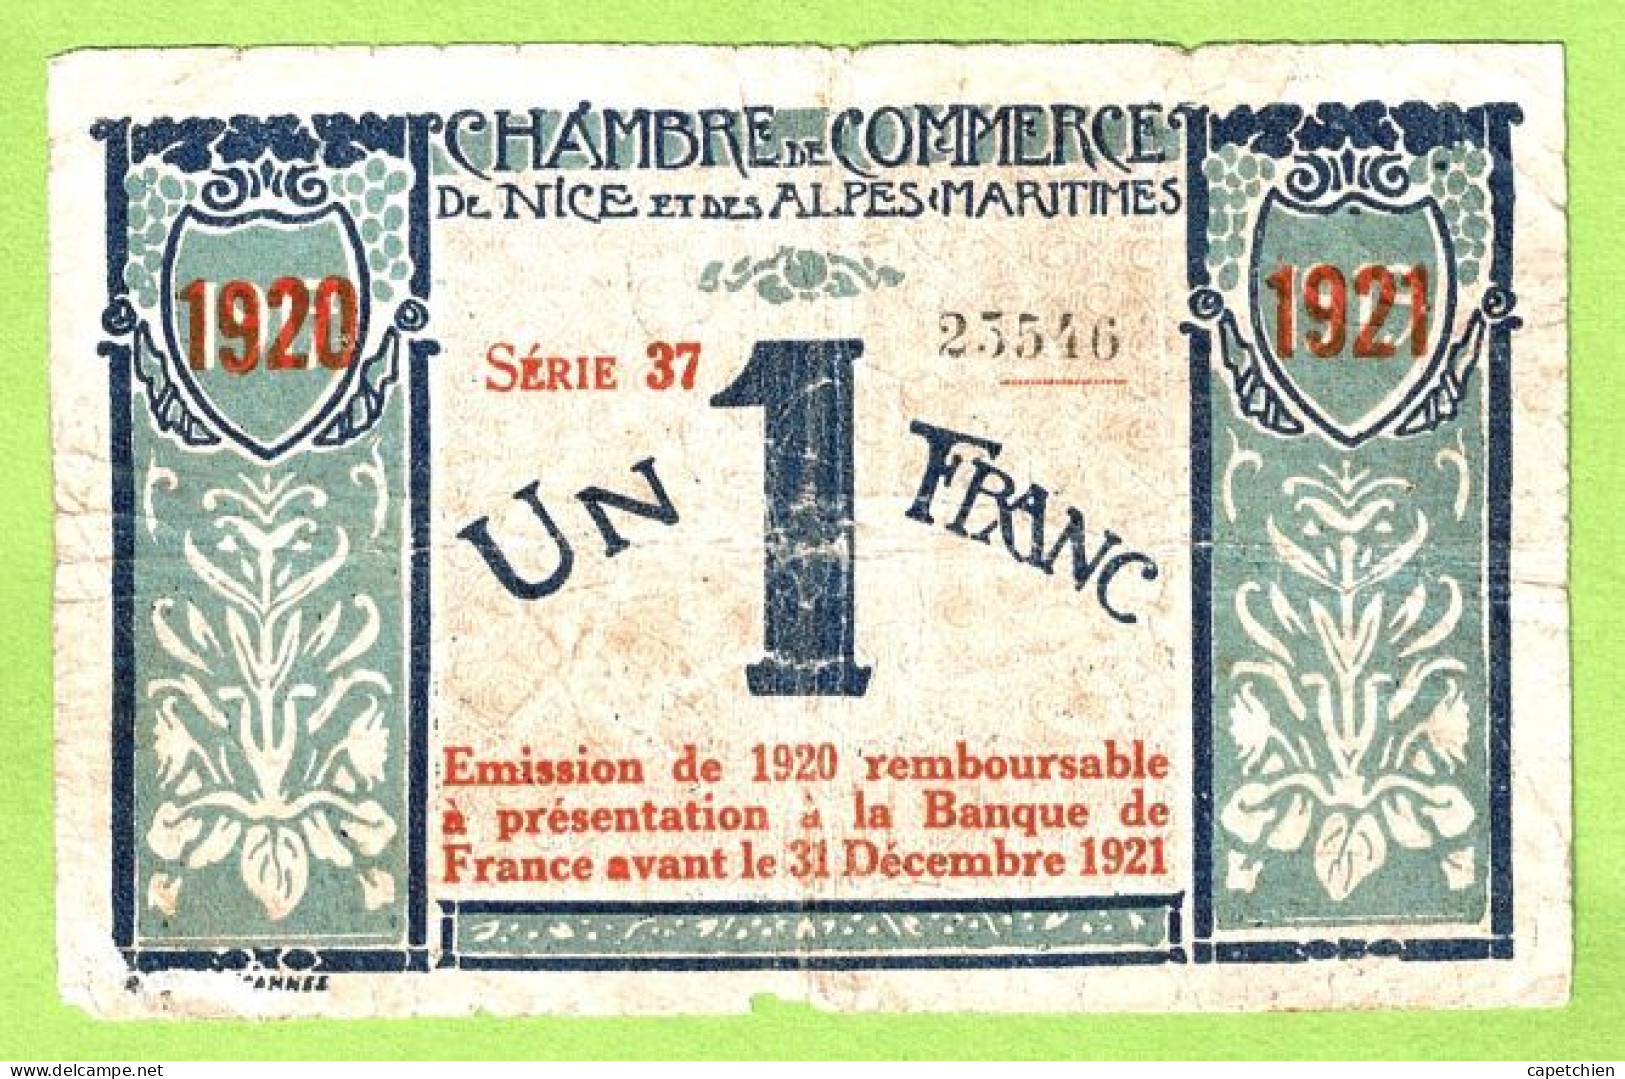 FRANCE / CHAMBRE De COMMERCE / NICE - ALPES MARITIMES / 1 FRANC / 1917-1919 SURCHARGE ROUGE 1920-1921 / N° 23546 / S 37 - Camera Di Commercio